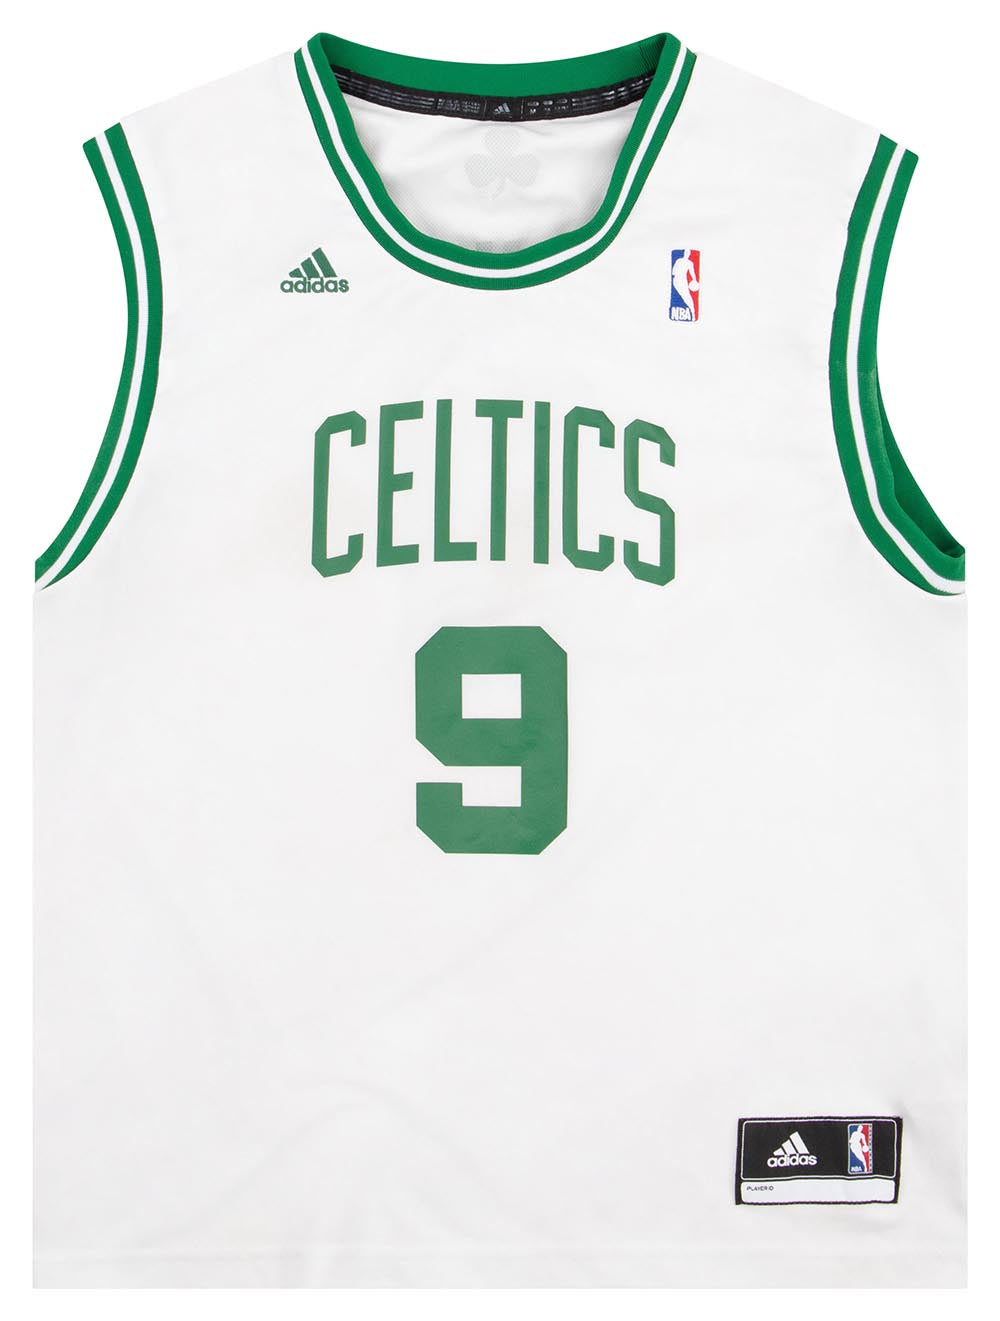 Ray Allen Boston Celtics Adidas NBA Swingman Jersey Mens Sz Medium